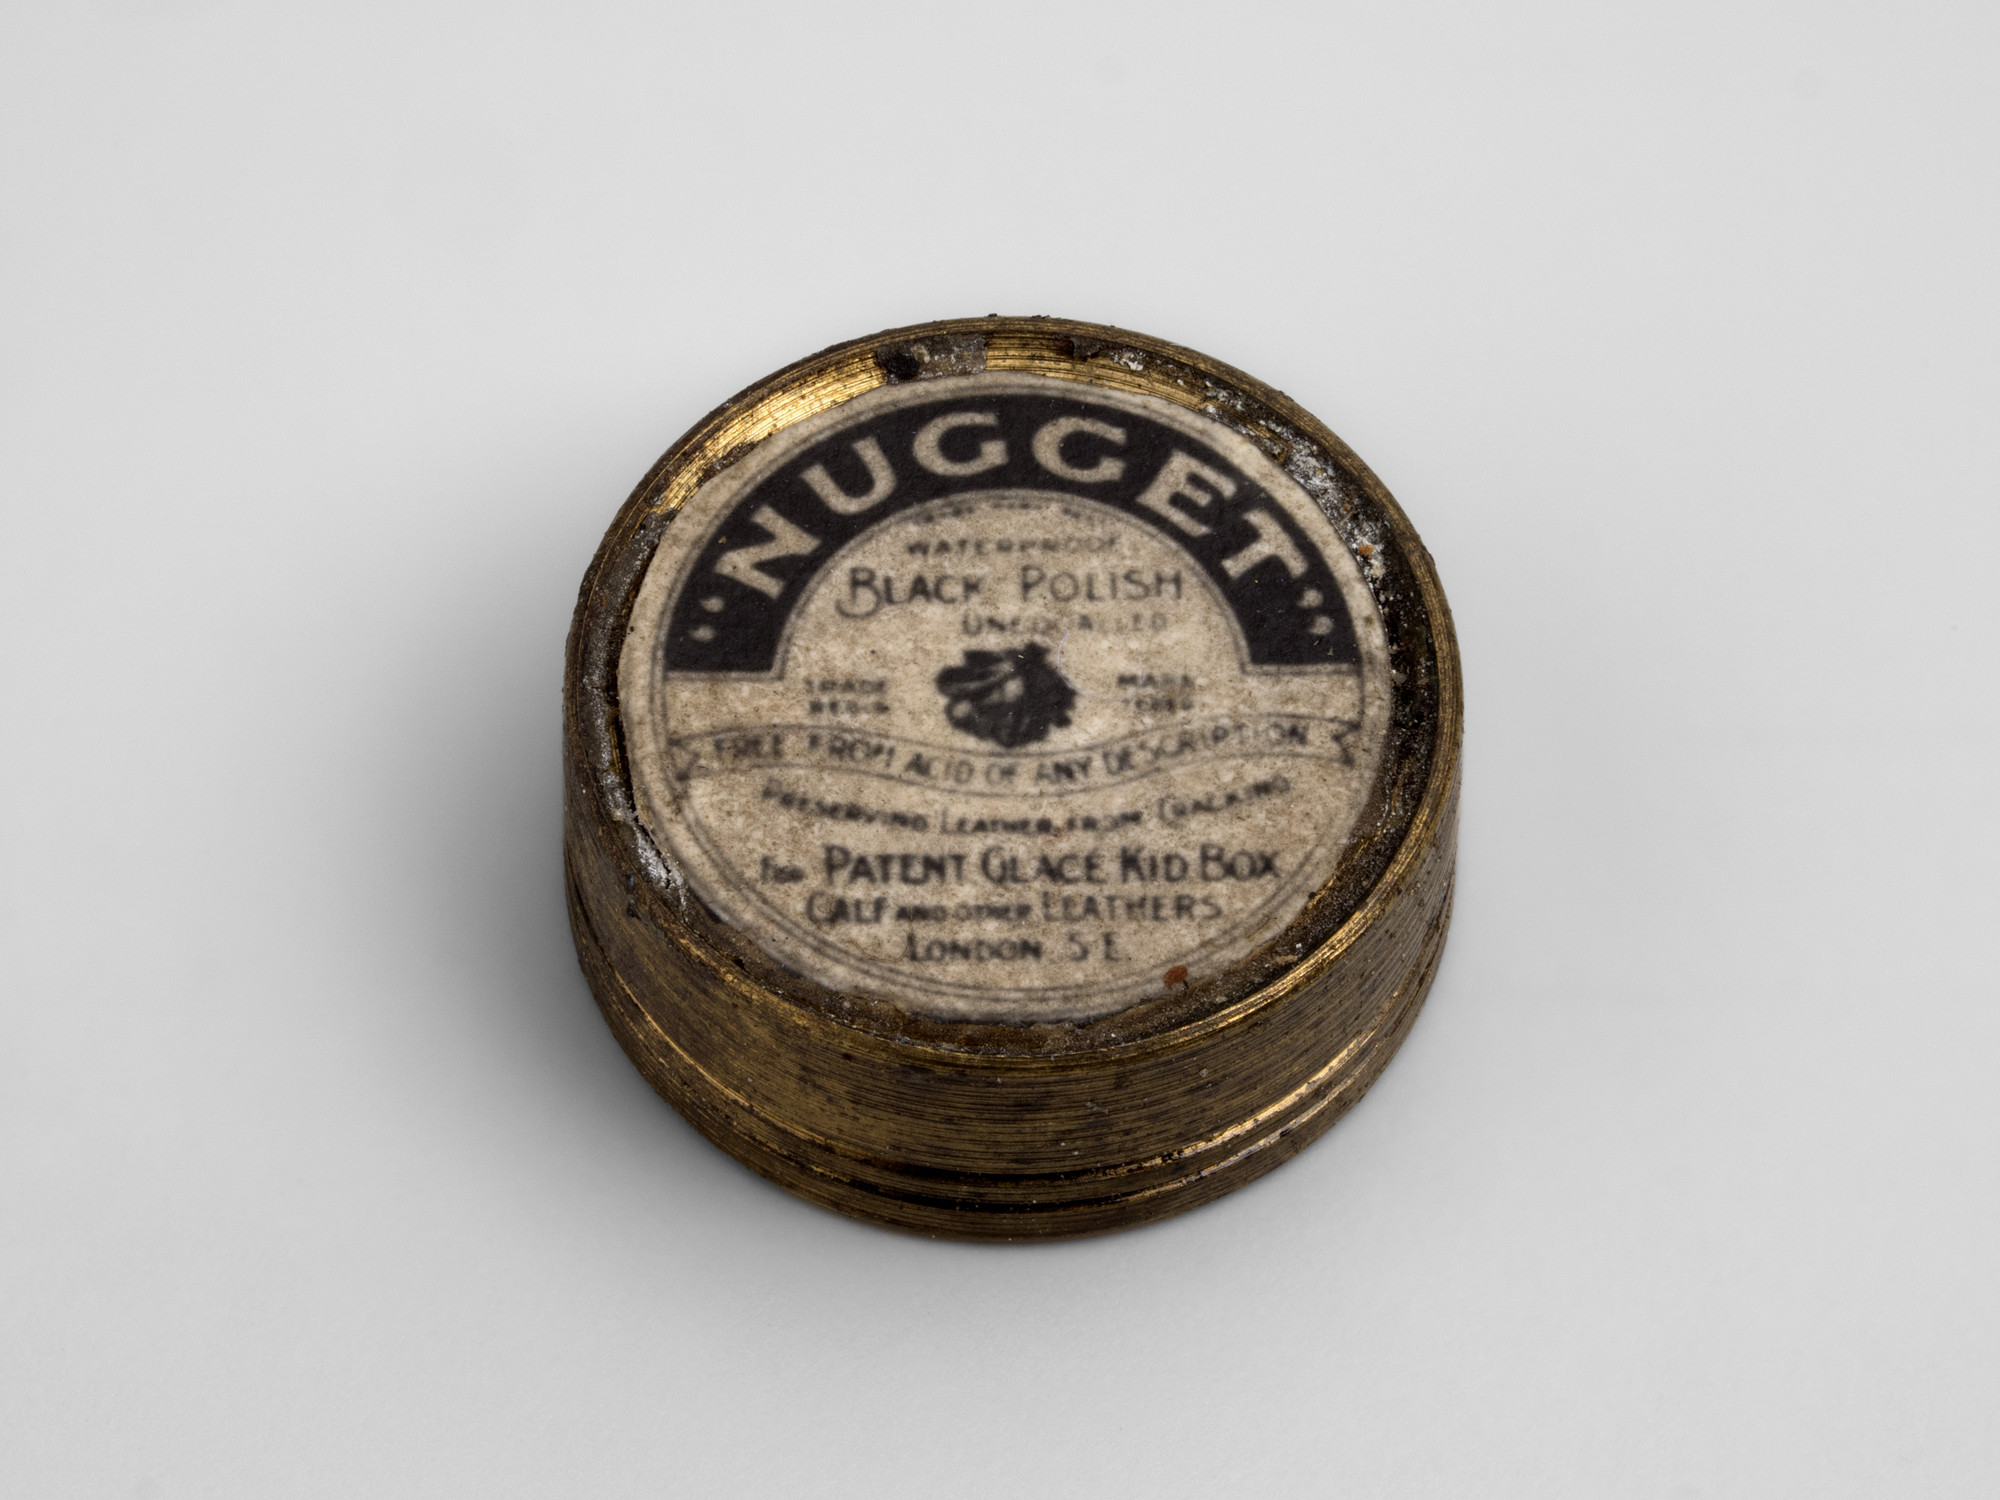 Miniature circular tin of Nugget leather polish; label on lid